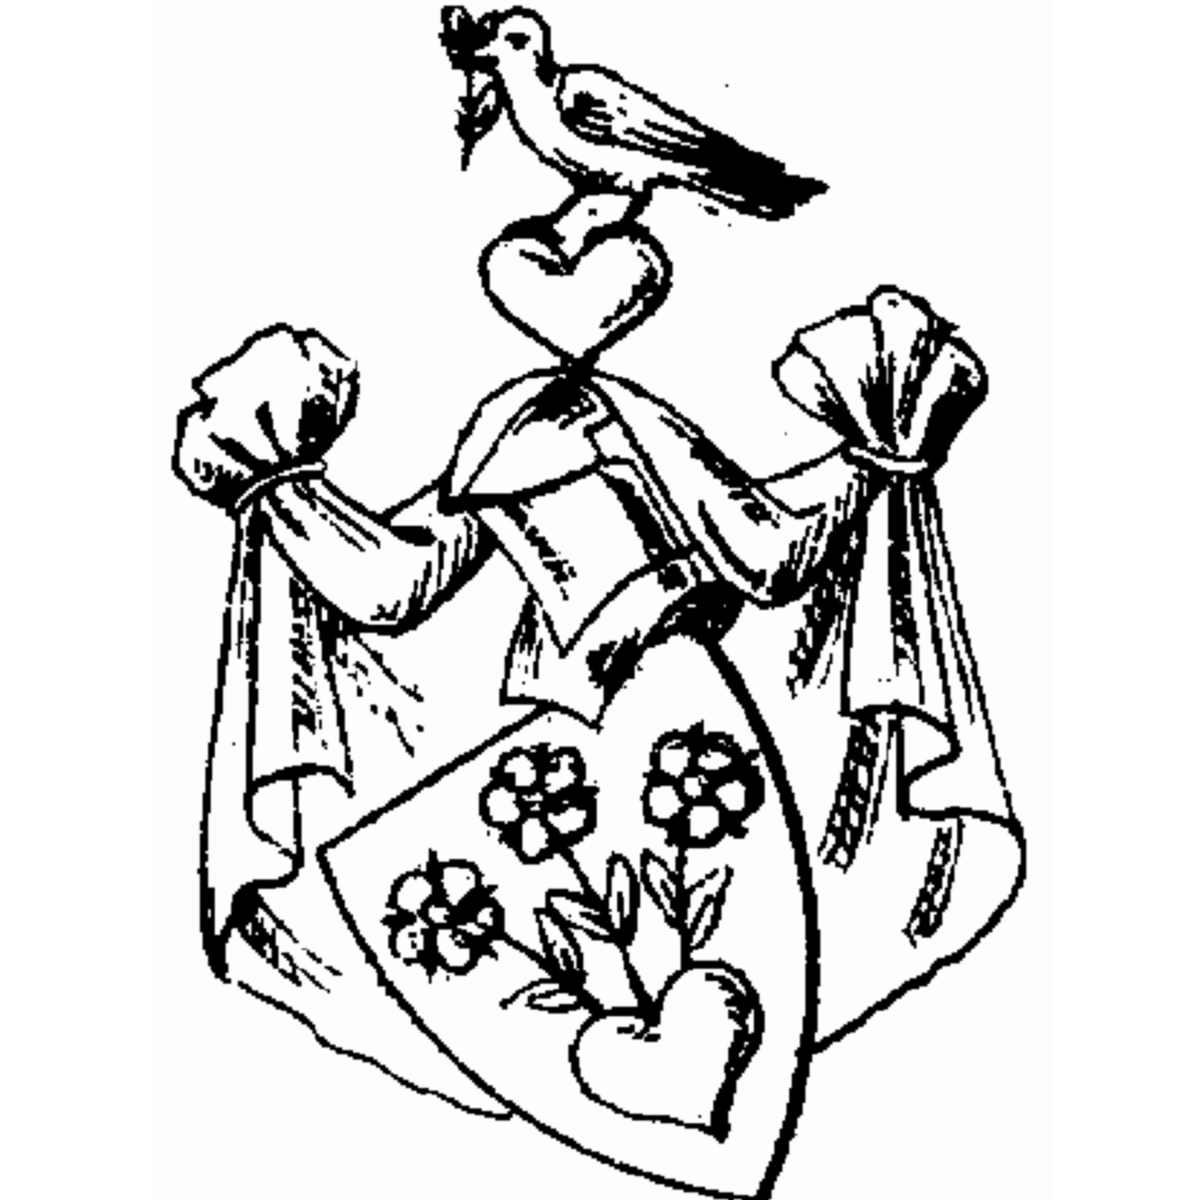 Wappen der Familie Pistor